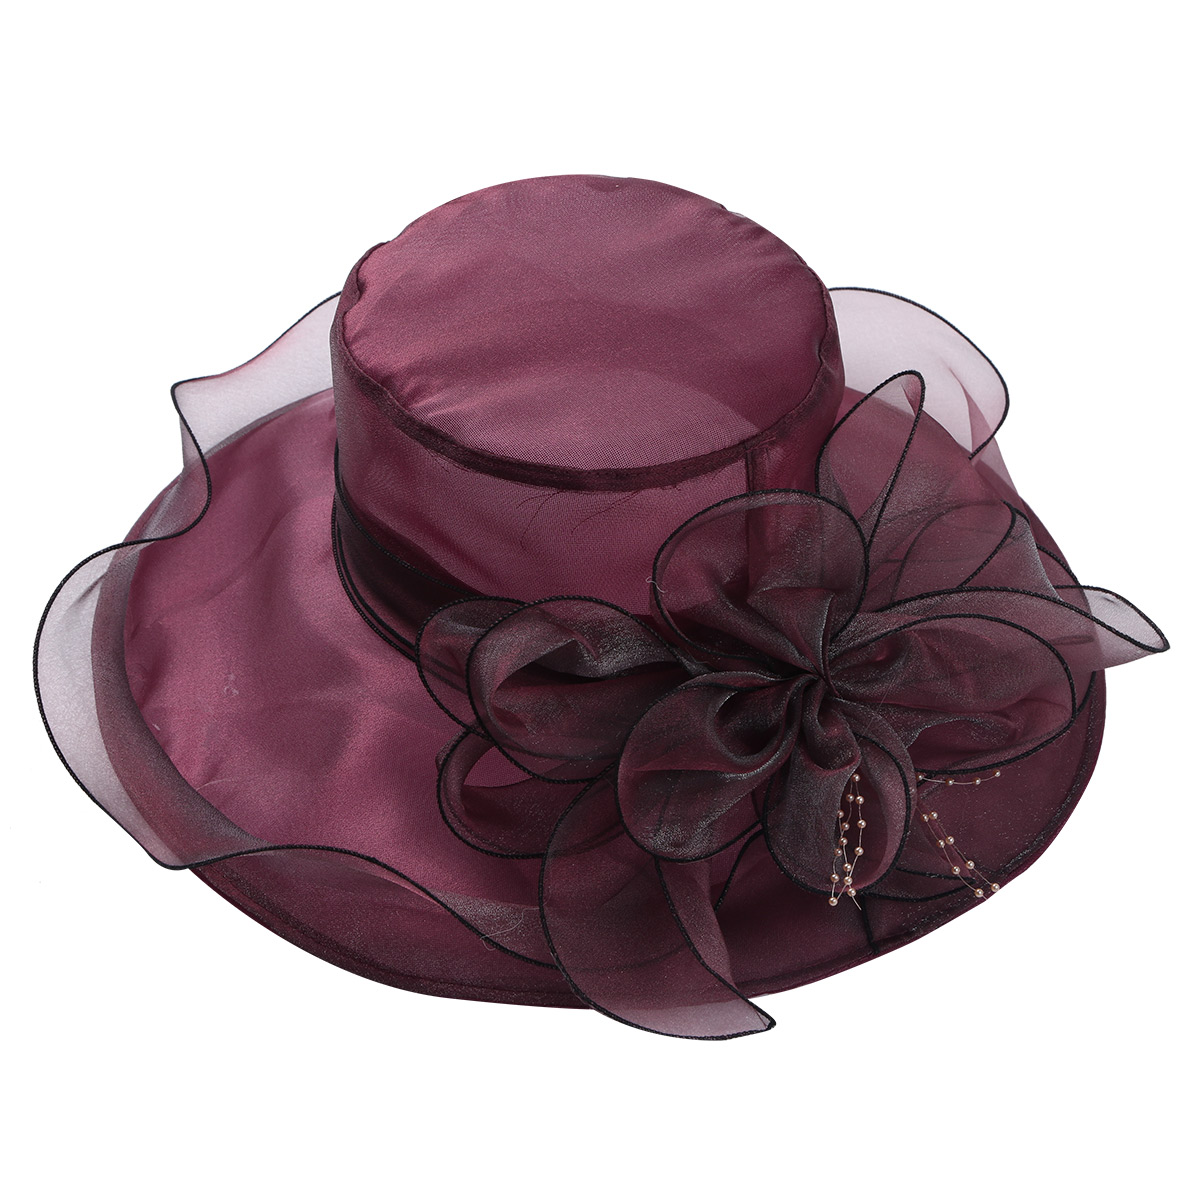 Womens Ruffles Wide Brim Top Flower Organza Kentucky Derby Church Cap Party Wedding Hat Big Summer Sun Hat: Wine Red